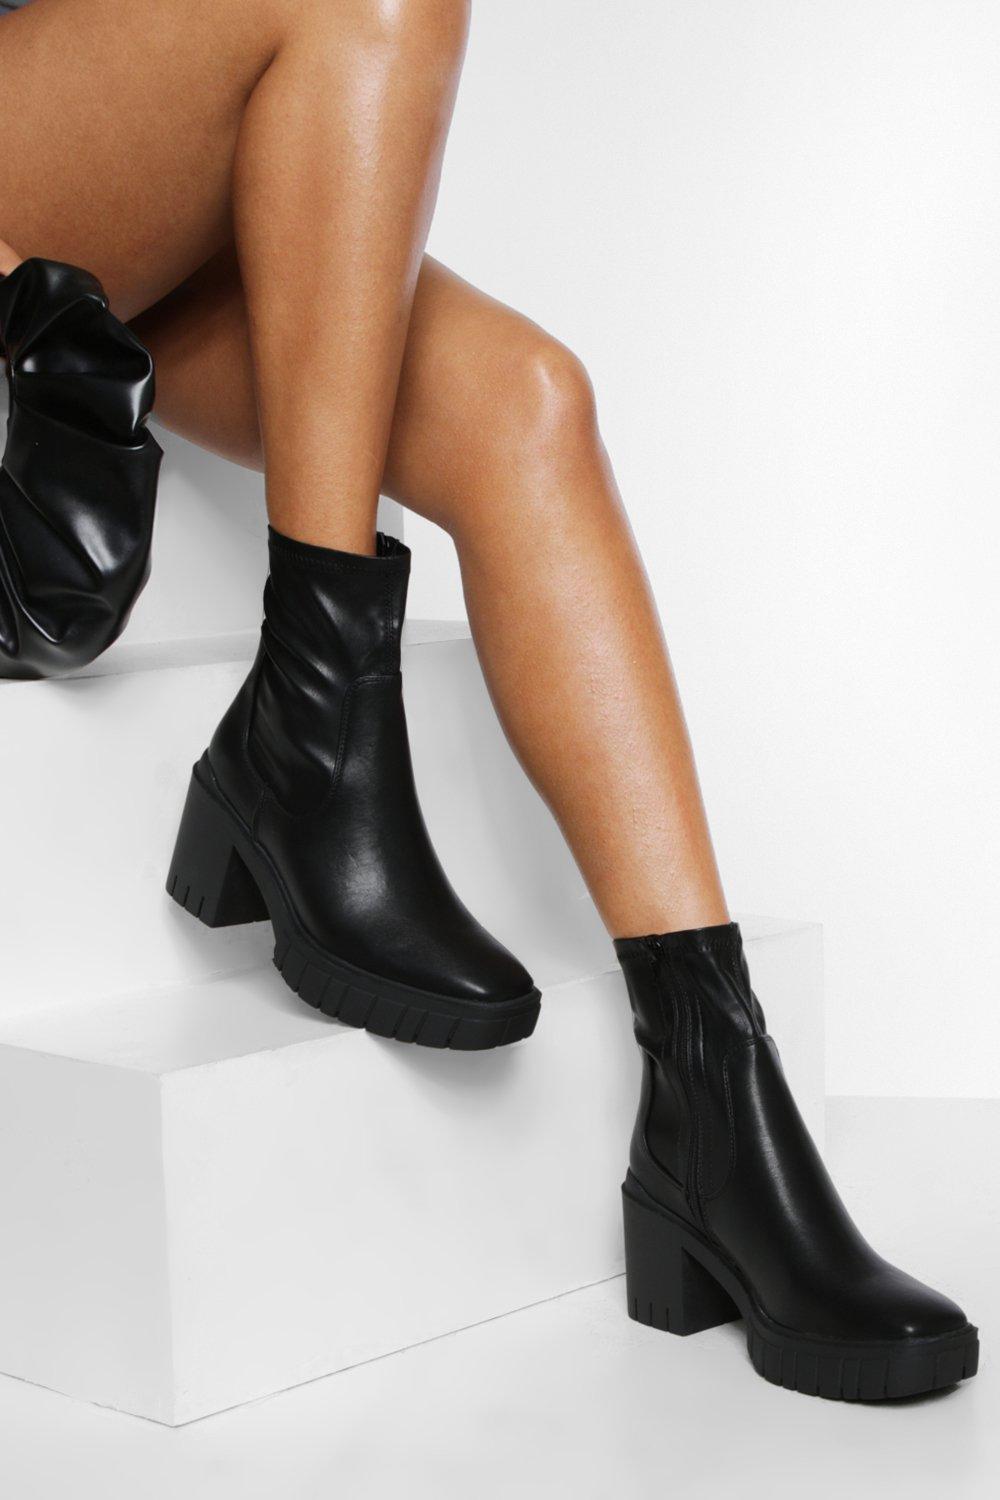 Womens Chunky Sock Boots - Black - 8, Black